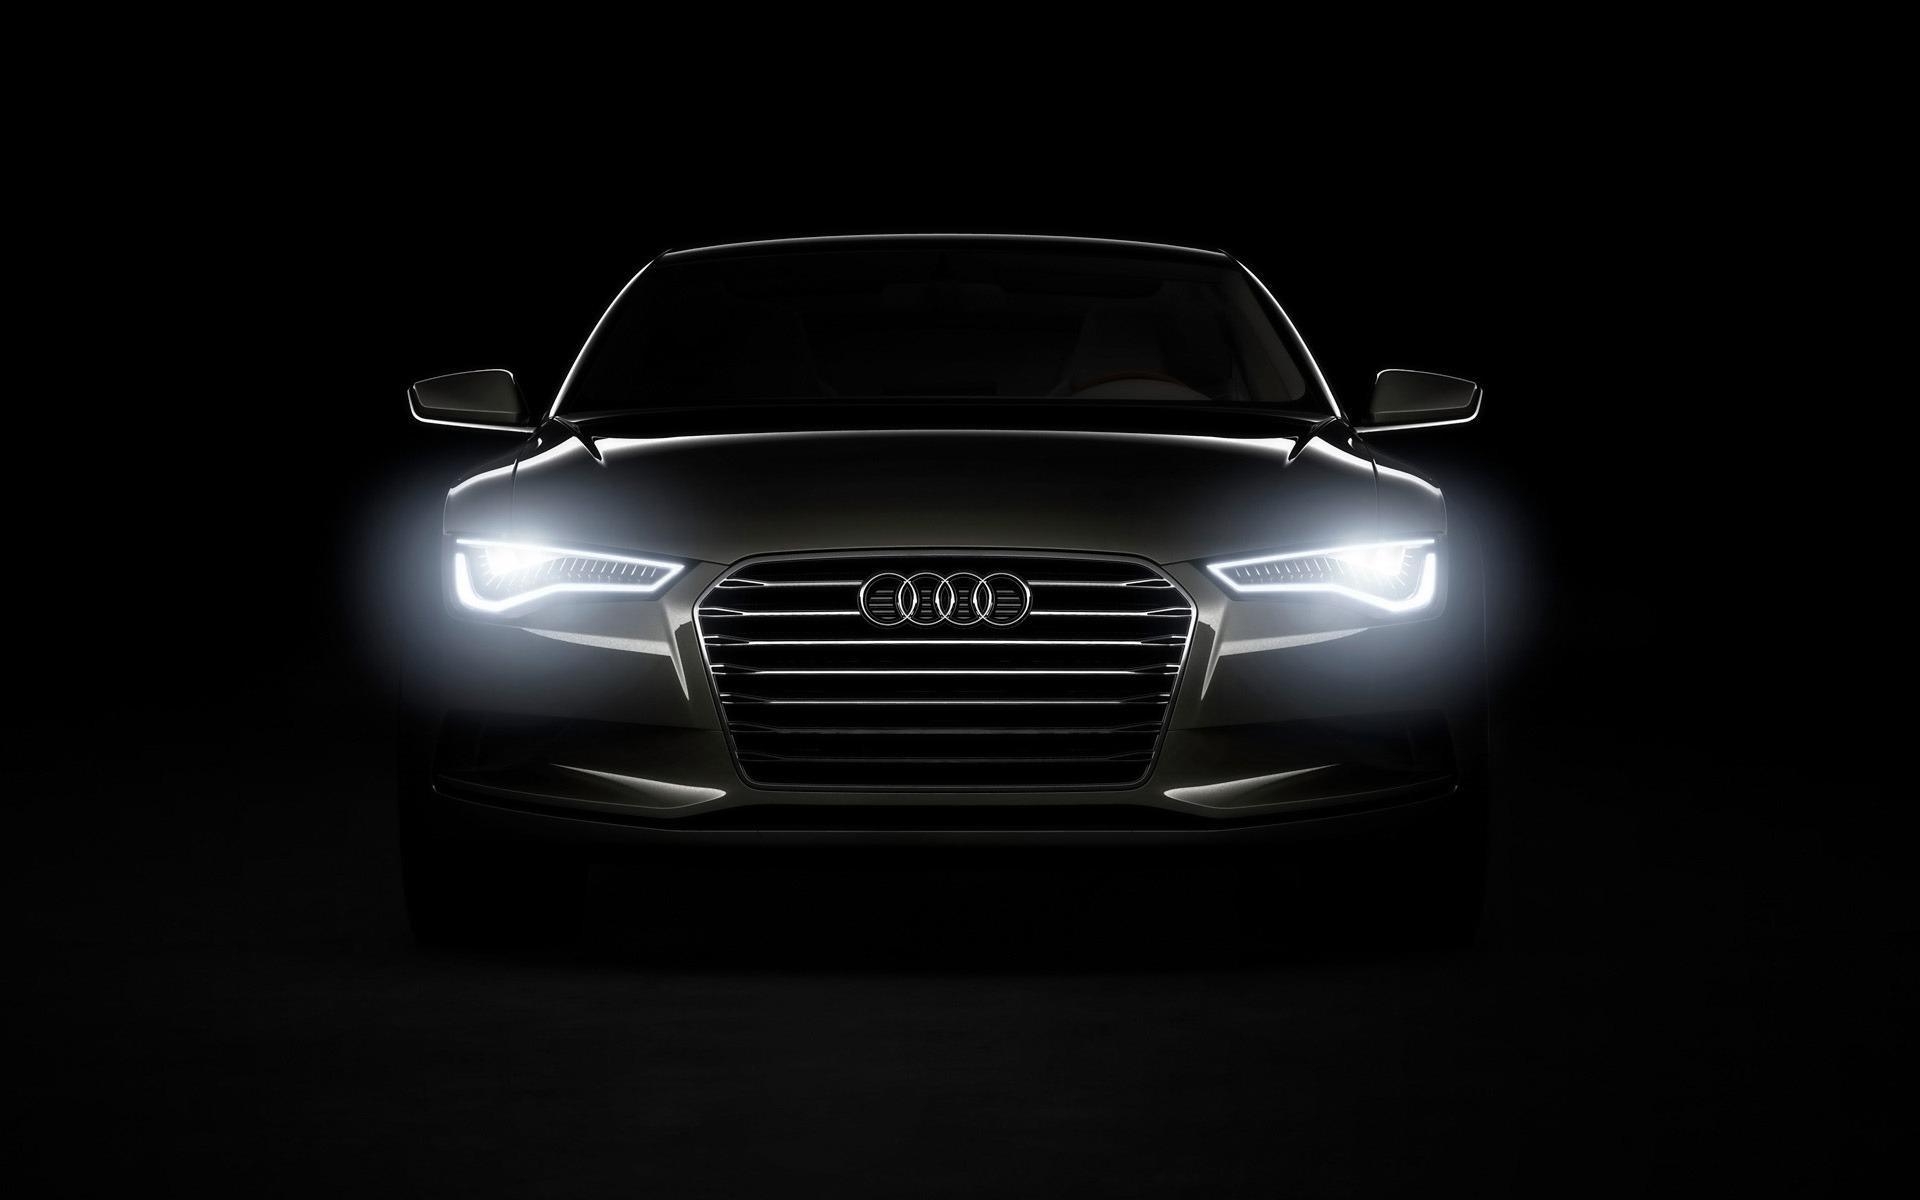 Audi A7 Headlights for 1920 x 1200 widescreen resolution